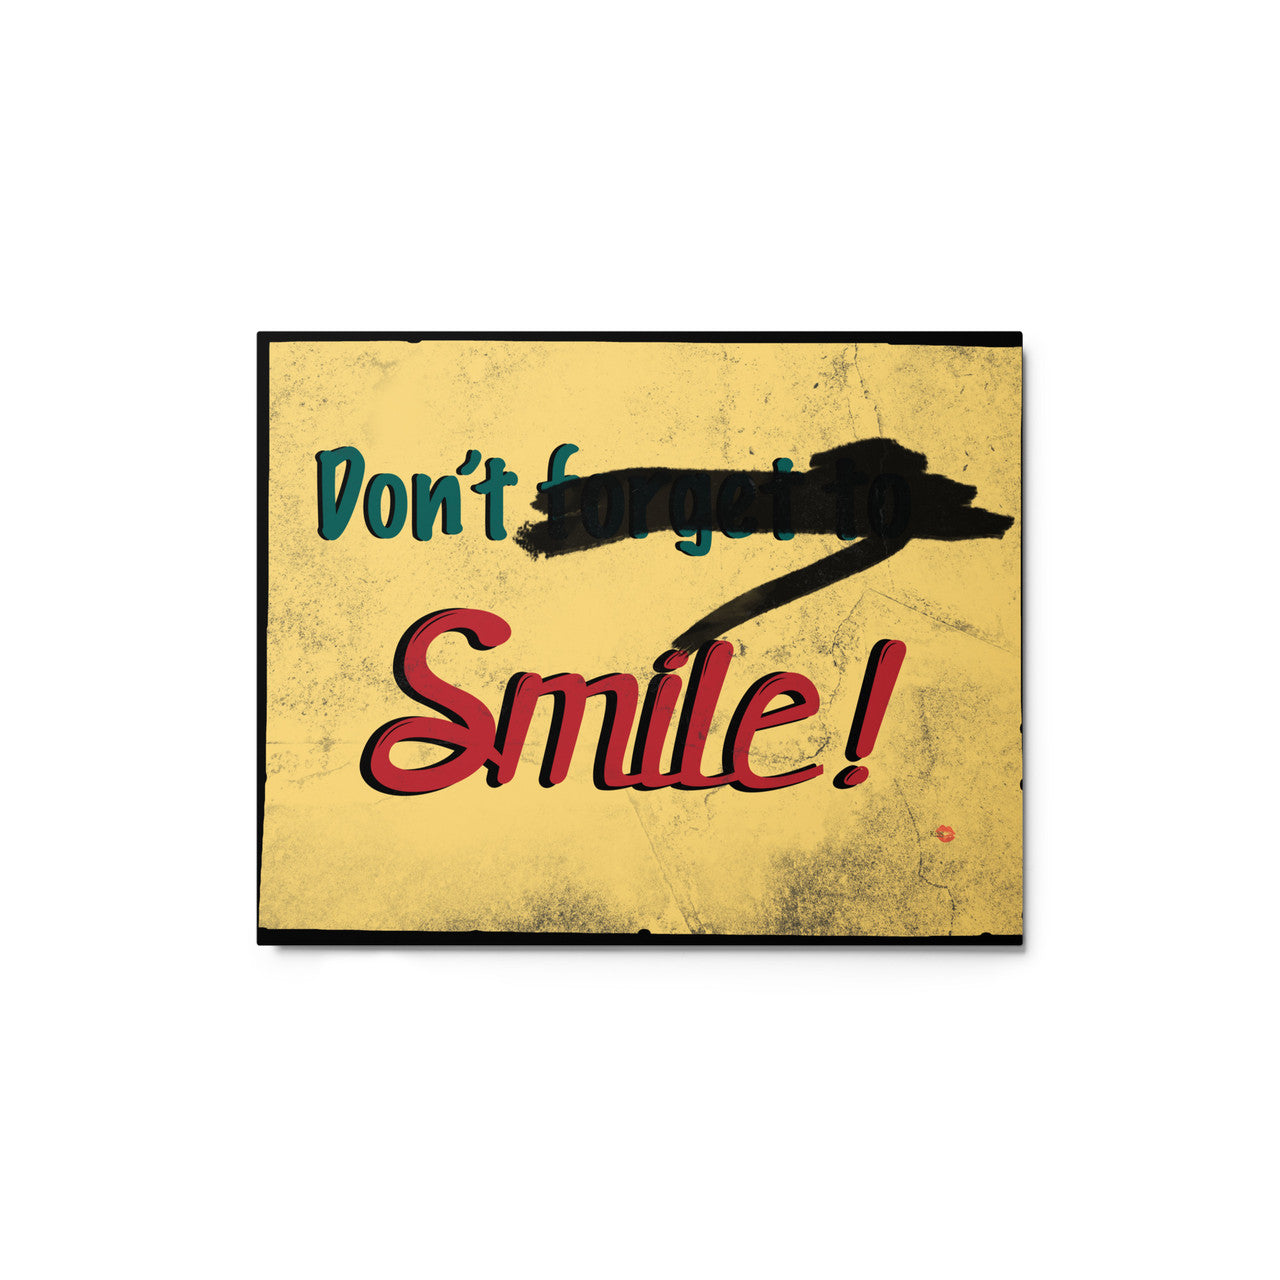 Don't Forget To Smile KiSS Metal Print - Joker Joaquin Phoenix Aluminium Wall Art Clown - Home Decor - Office Sign - Folie Deux